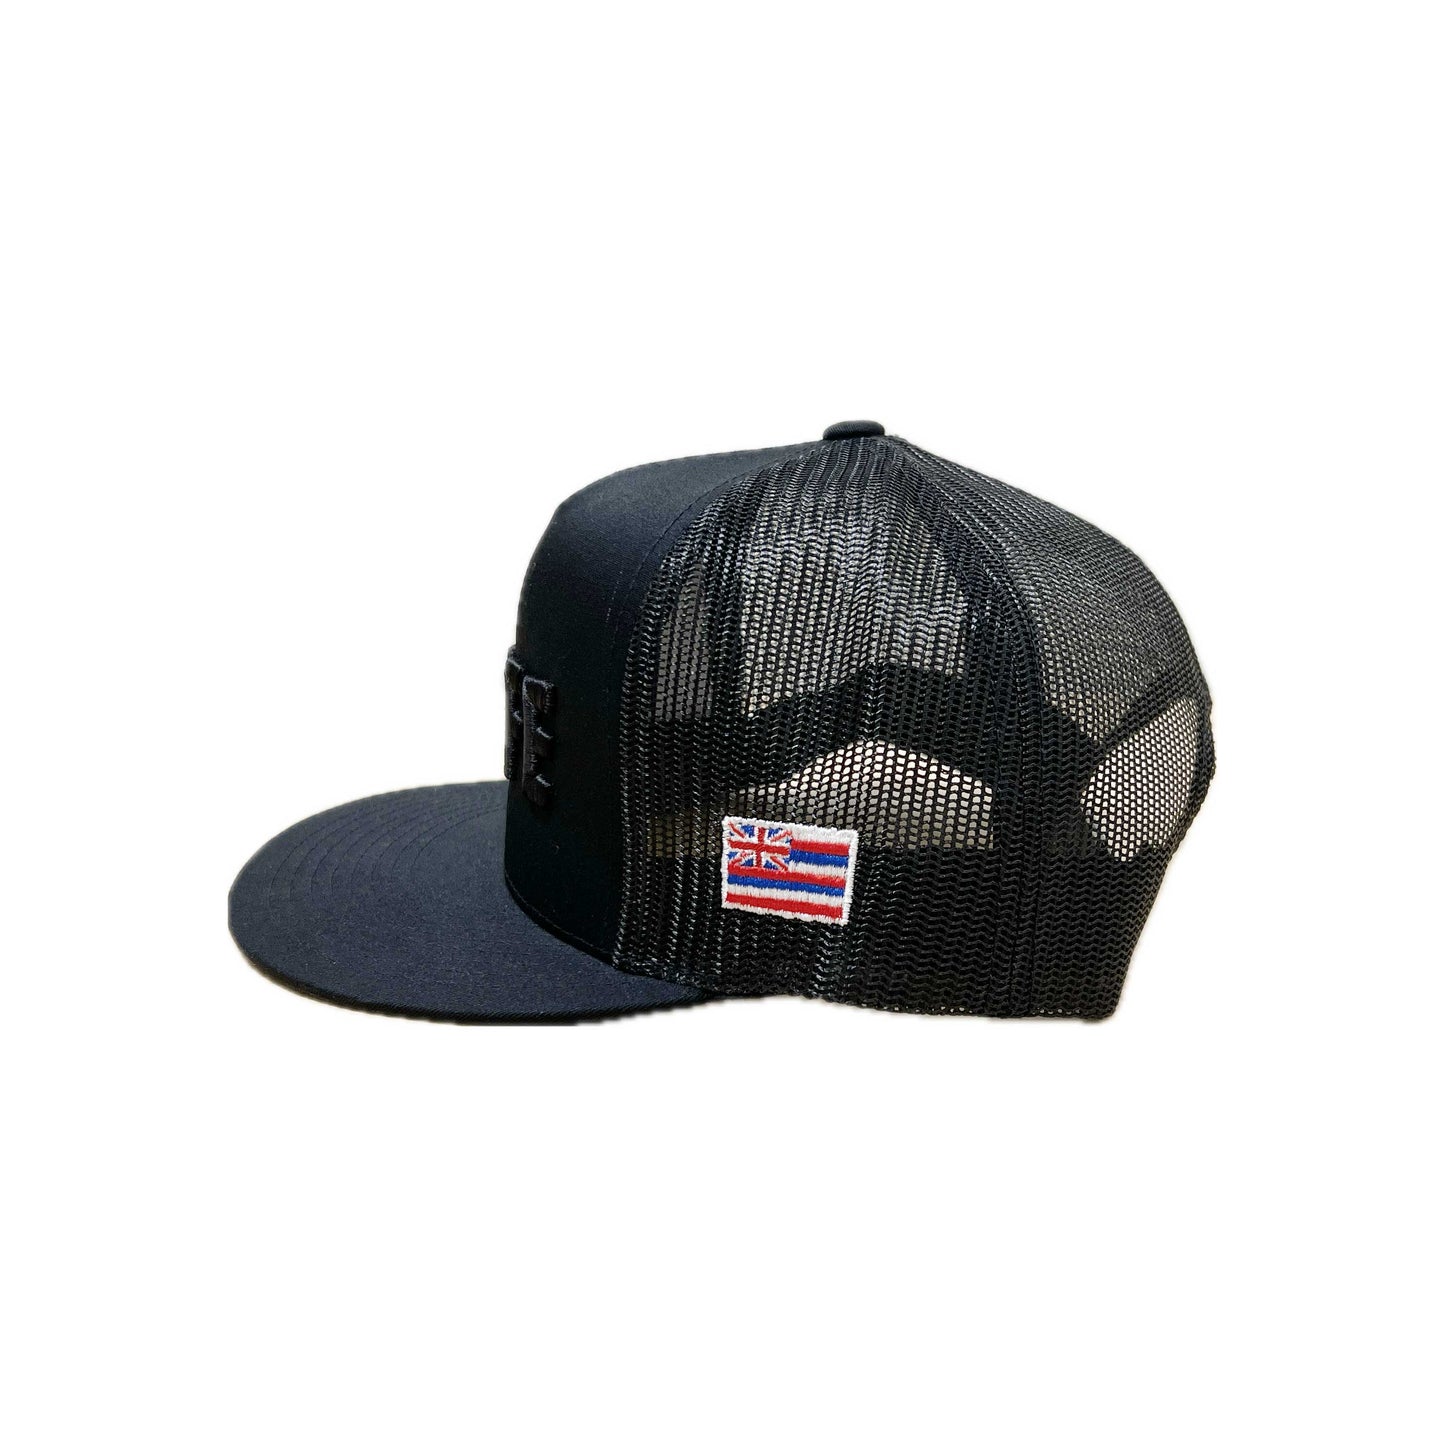 HILIFE 3D logo Snapback hats Black Mesh